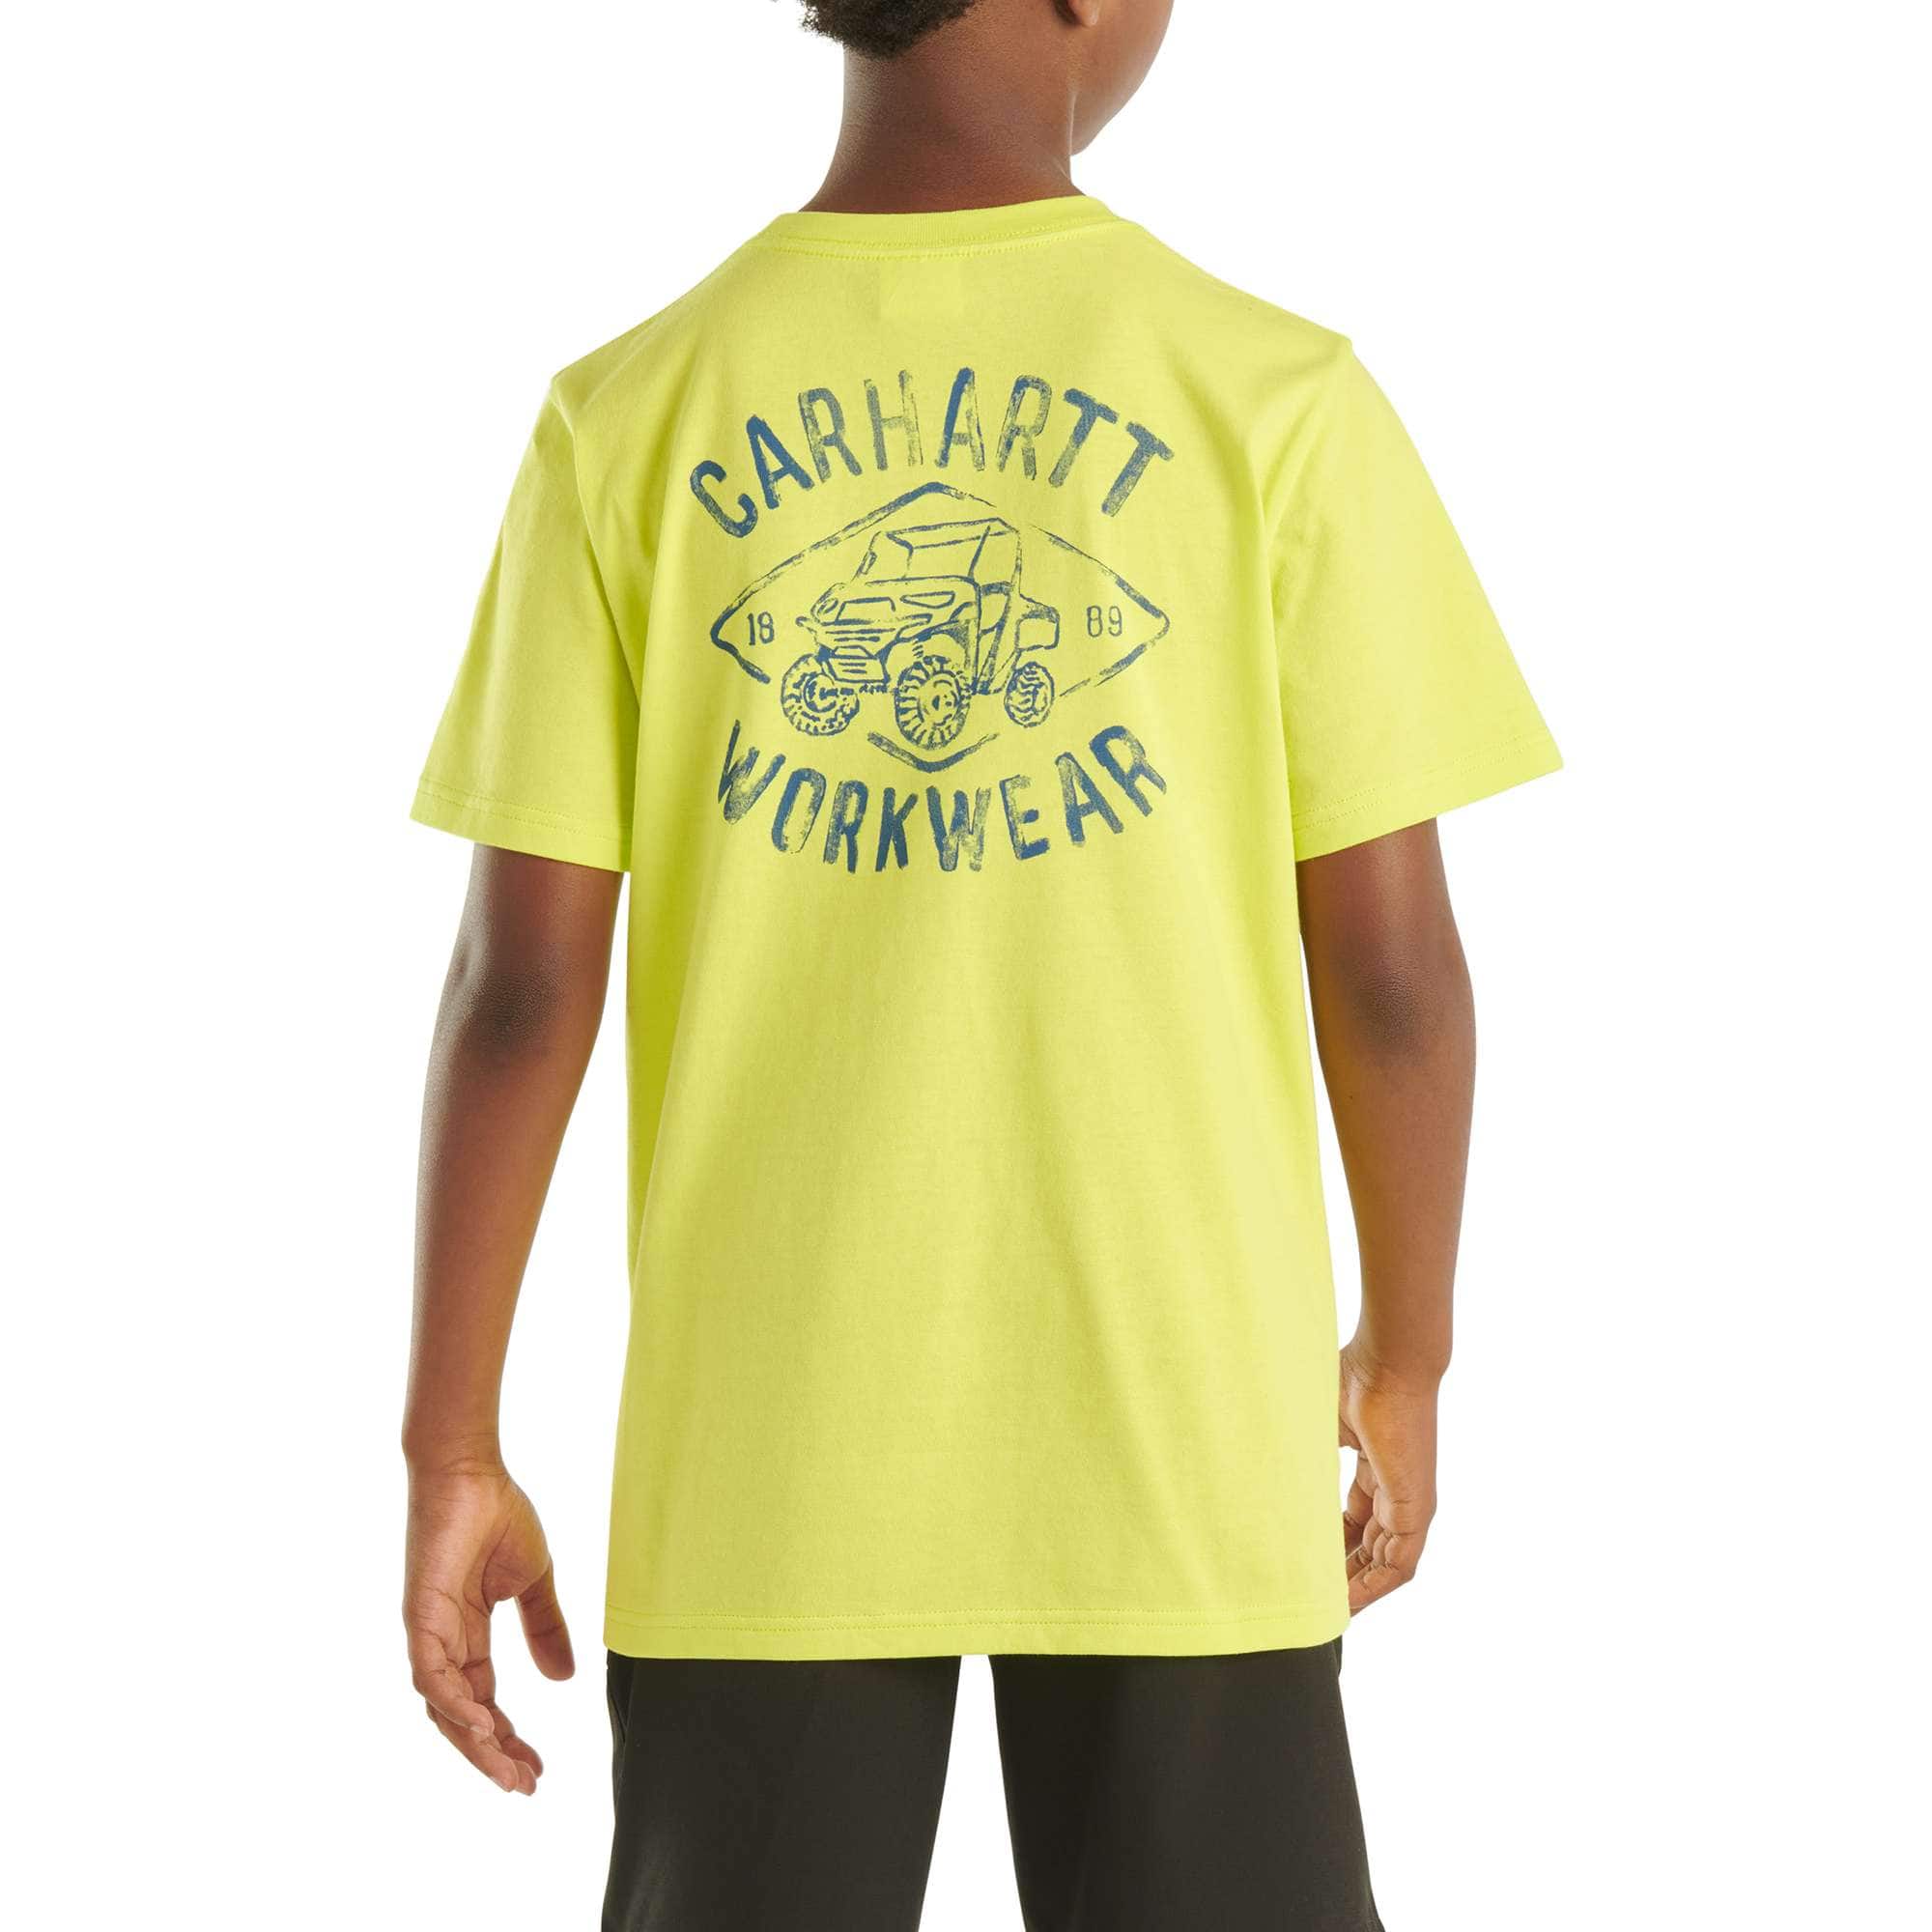 Boys' Short-Sleeve Graphic T-Shirt (Child/Youth)